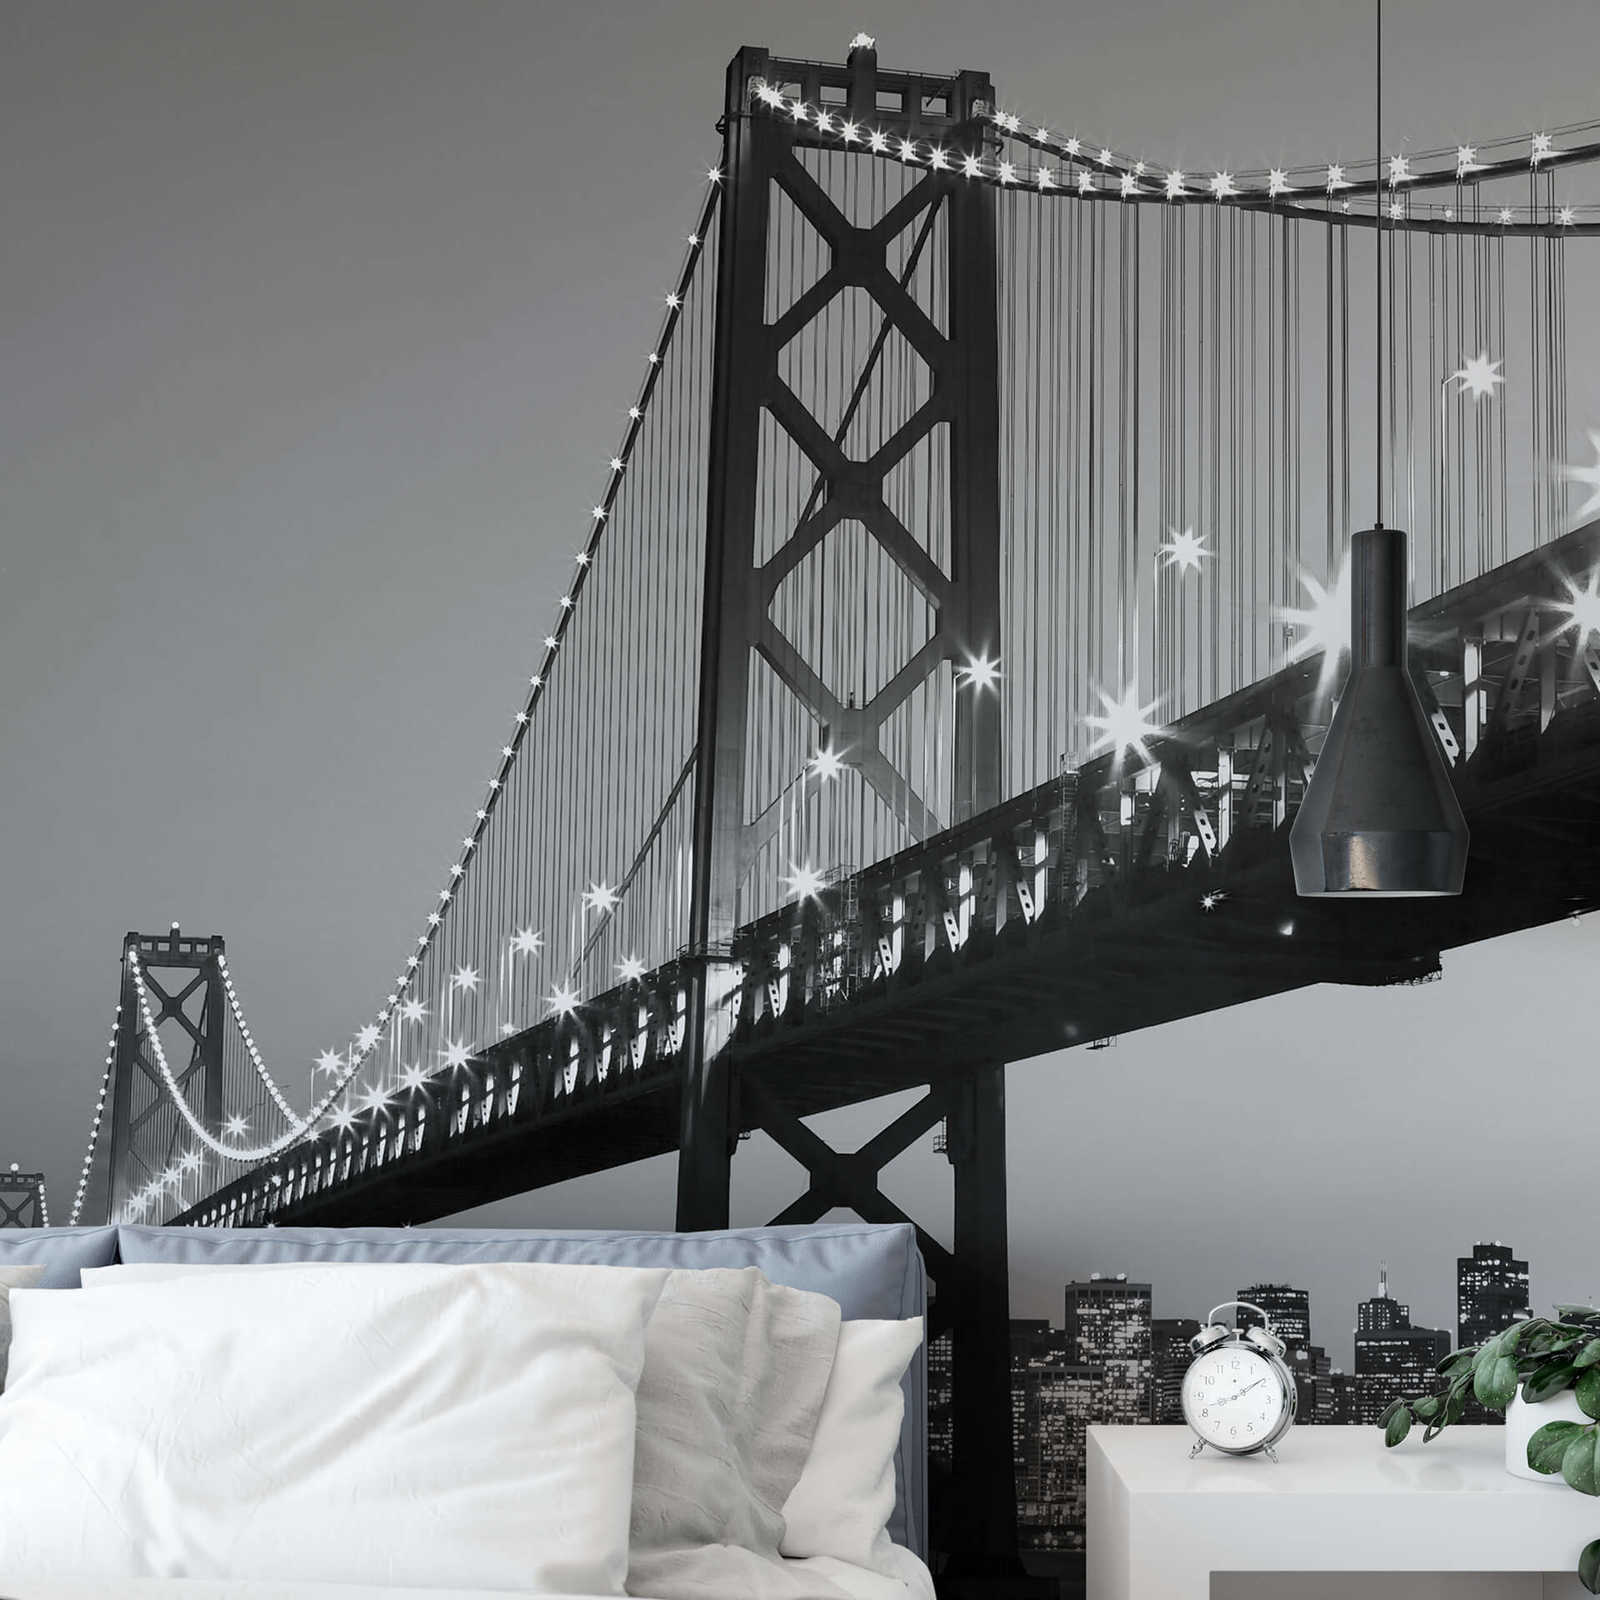             San Francisco photo wallpaper black and white, portrait format
        